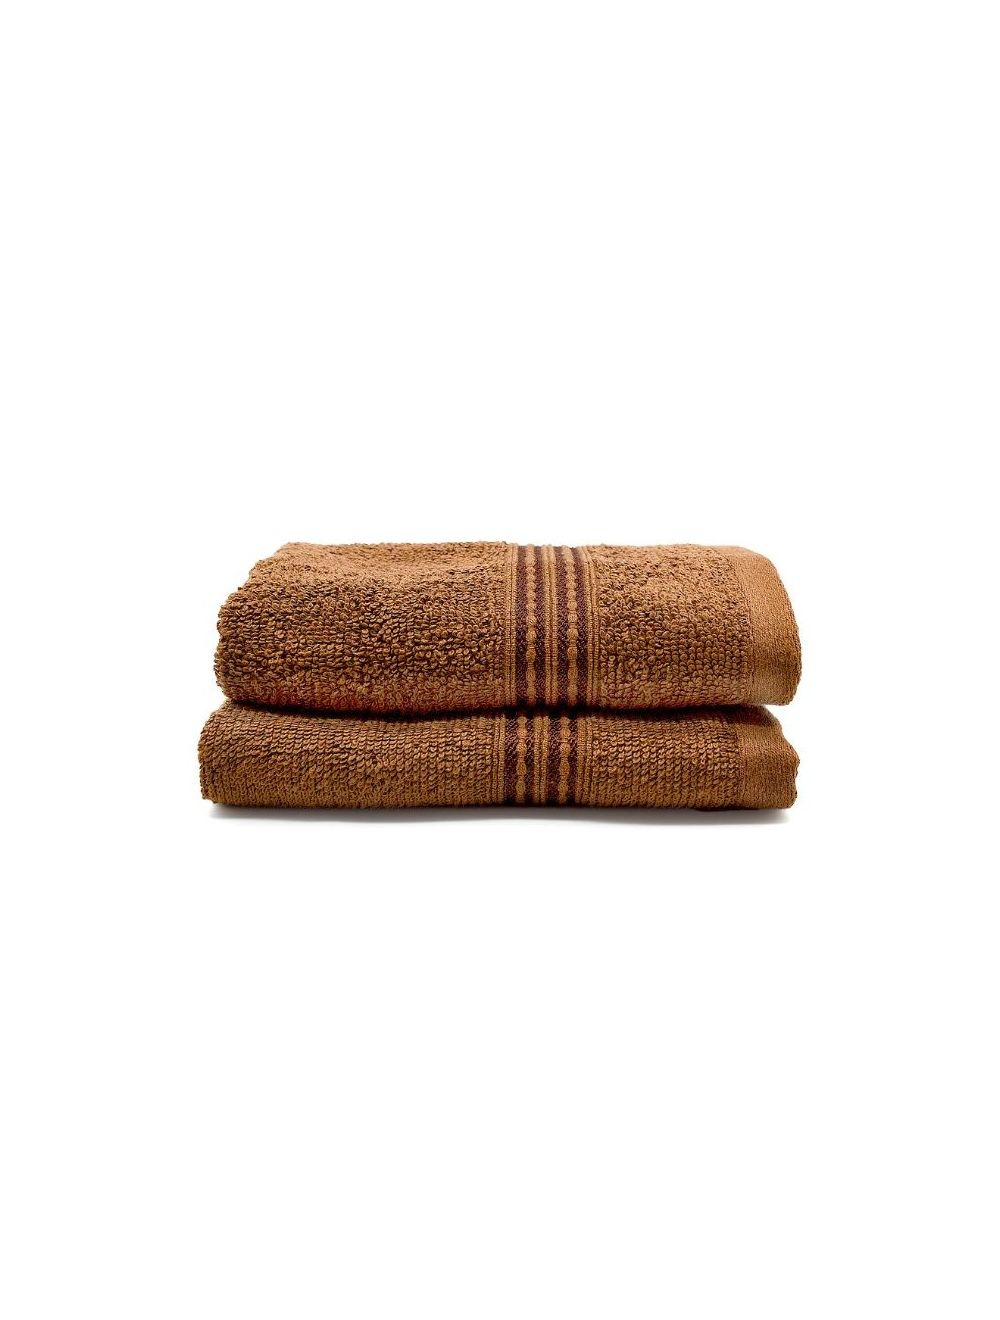 Rahalife 100% Cotton 2-Piece Face Towel Set, Classic Collection, Brown-14RLFT036